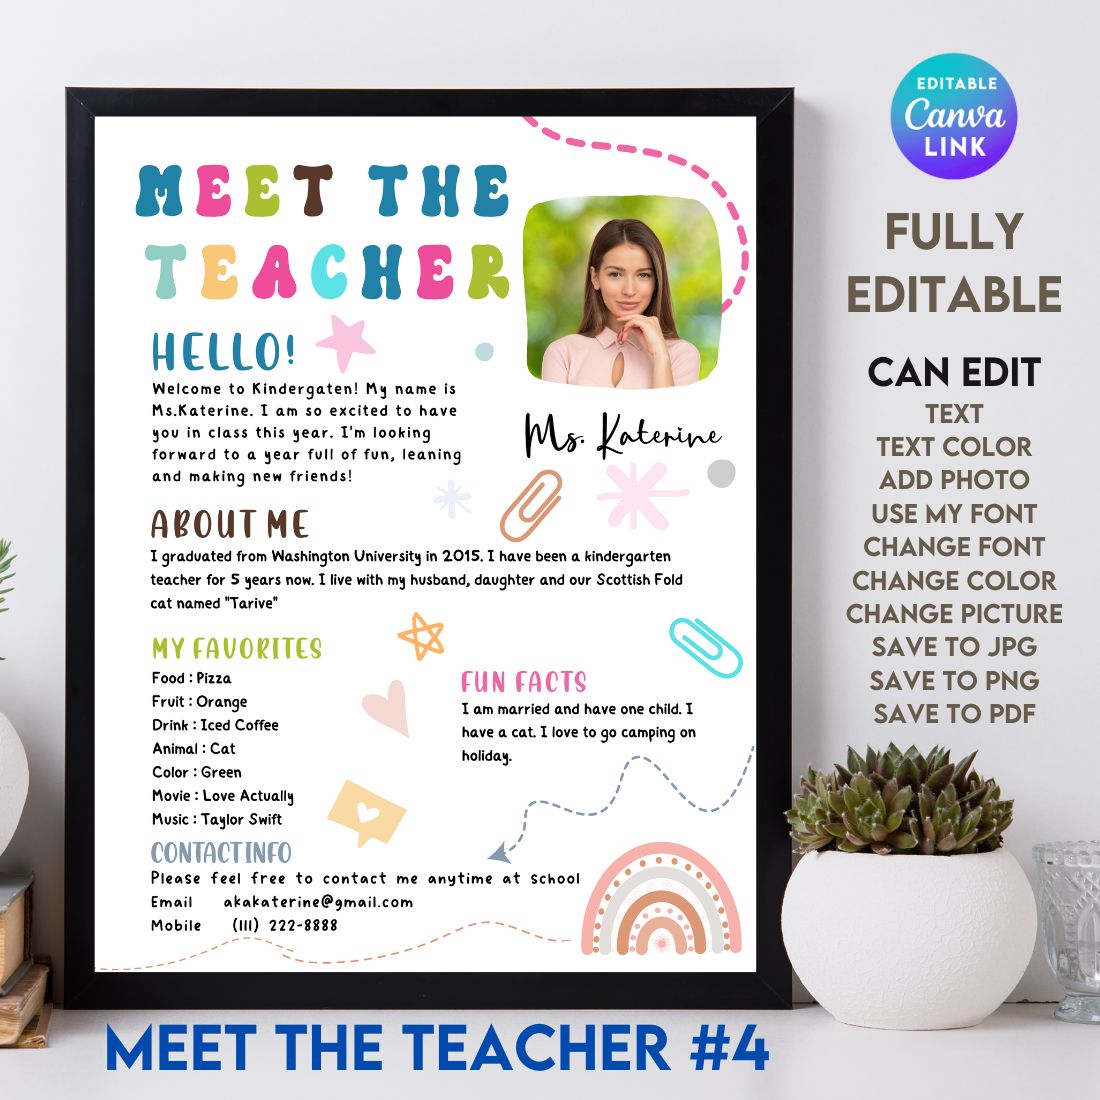 Meet The Teacher #4 – Canva Template cover image.